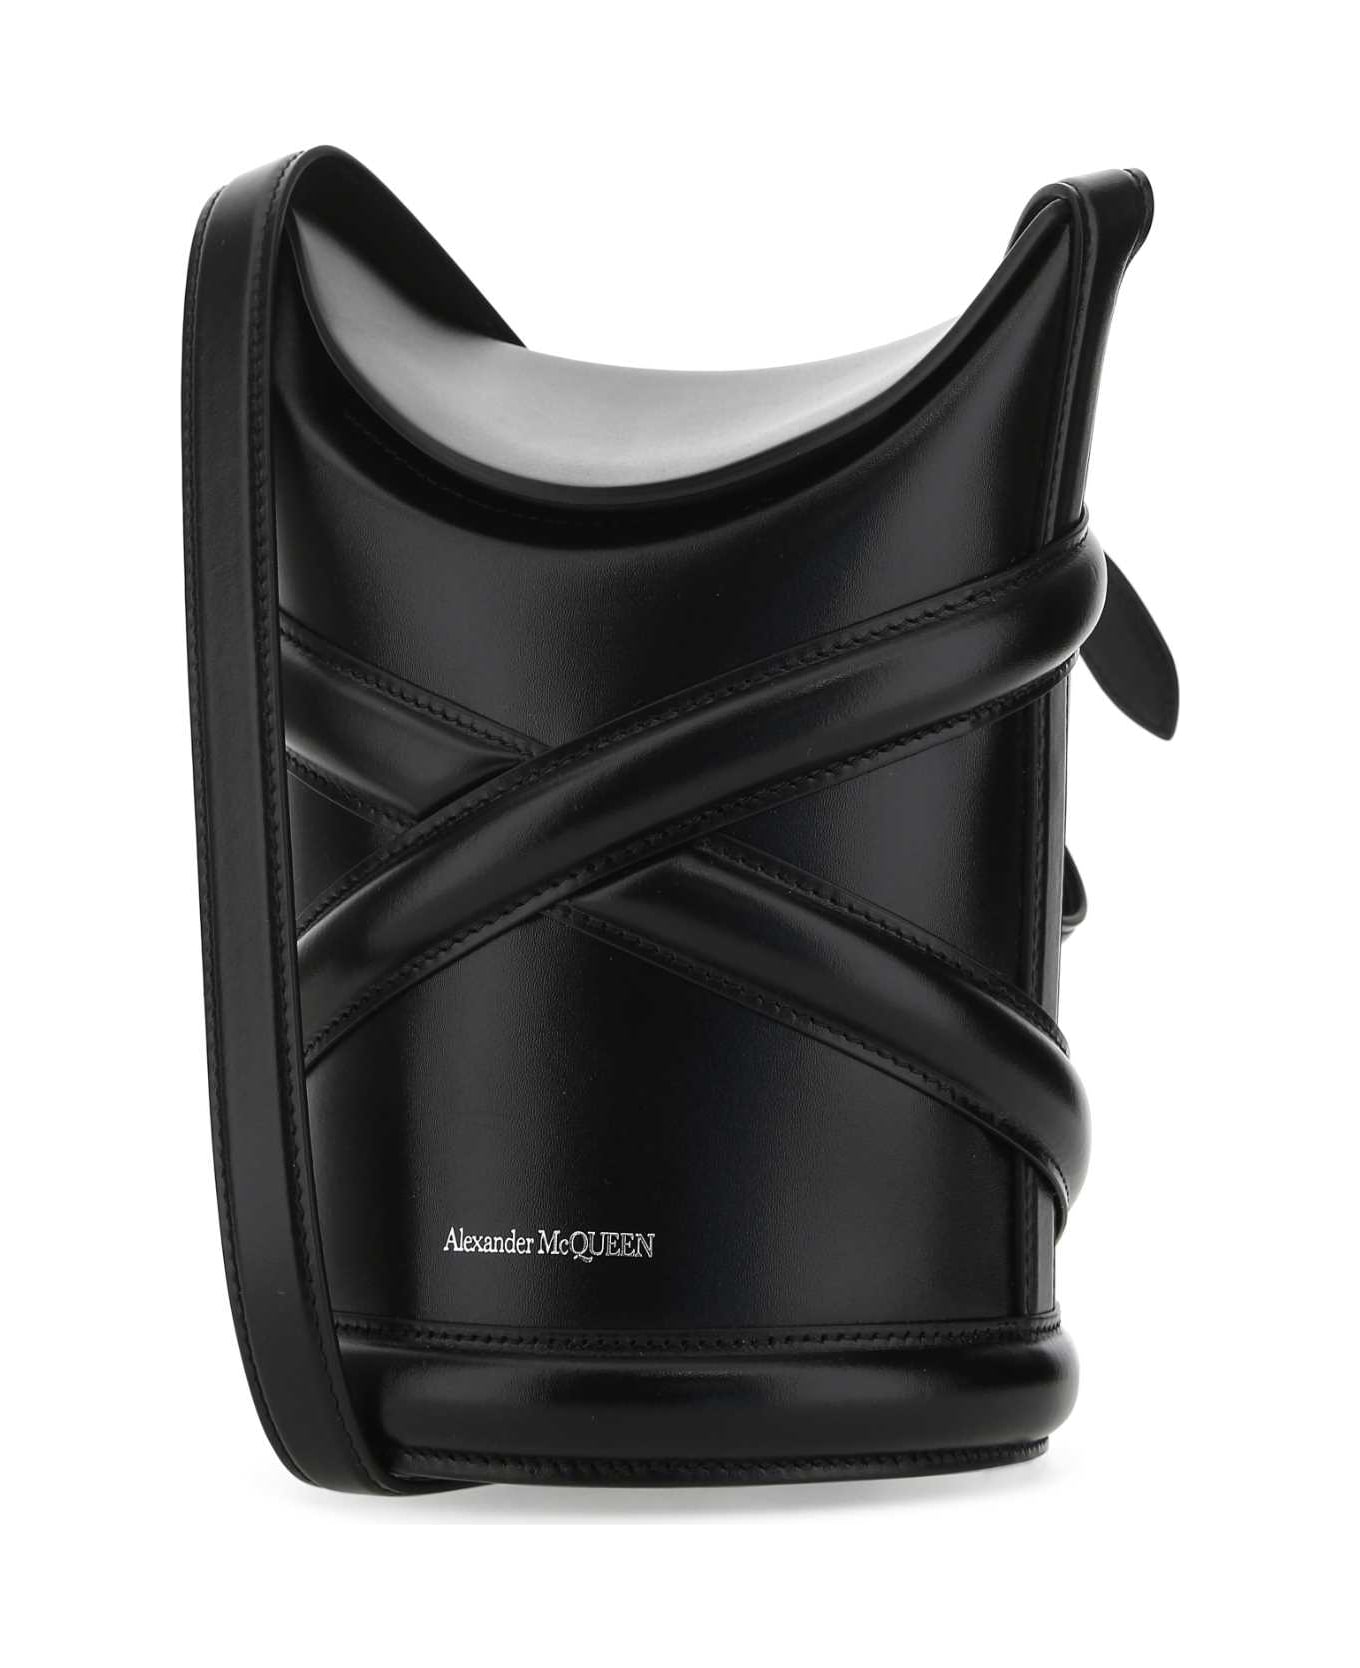 Alexander McQueen Black Leather The Curve Bucket Bag - 1000